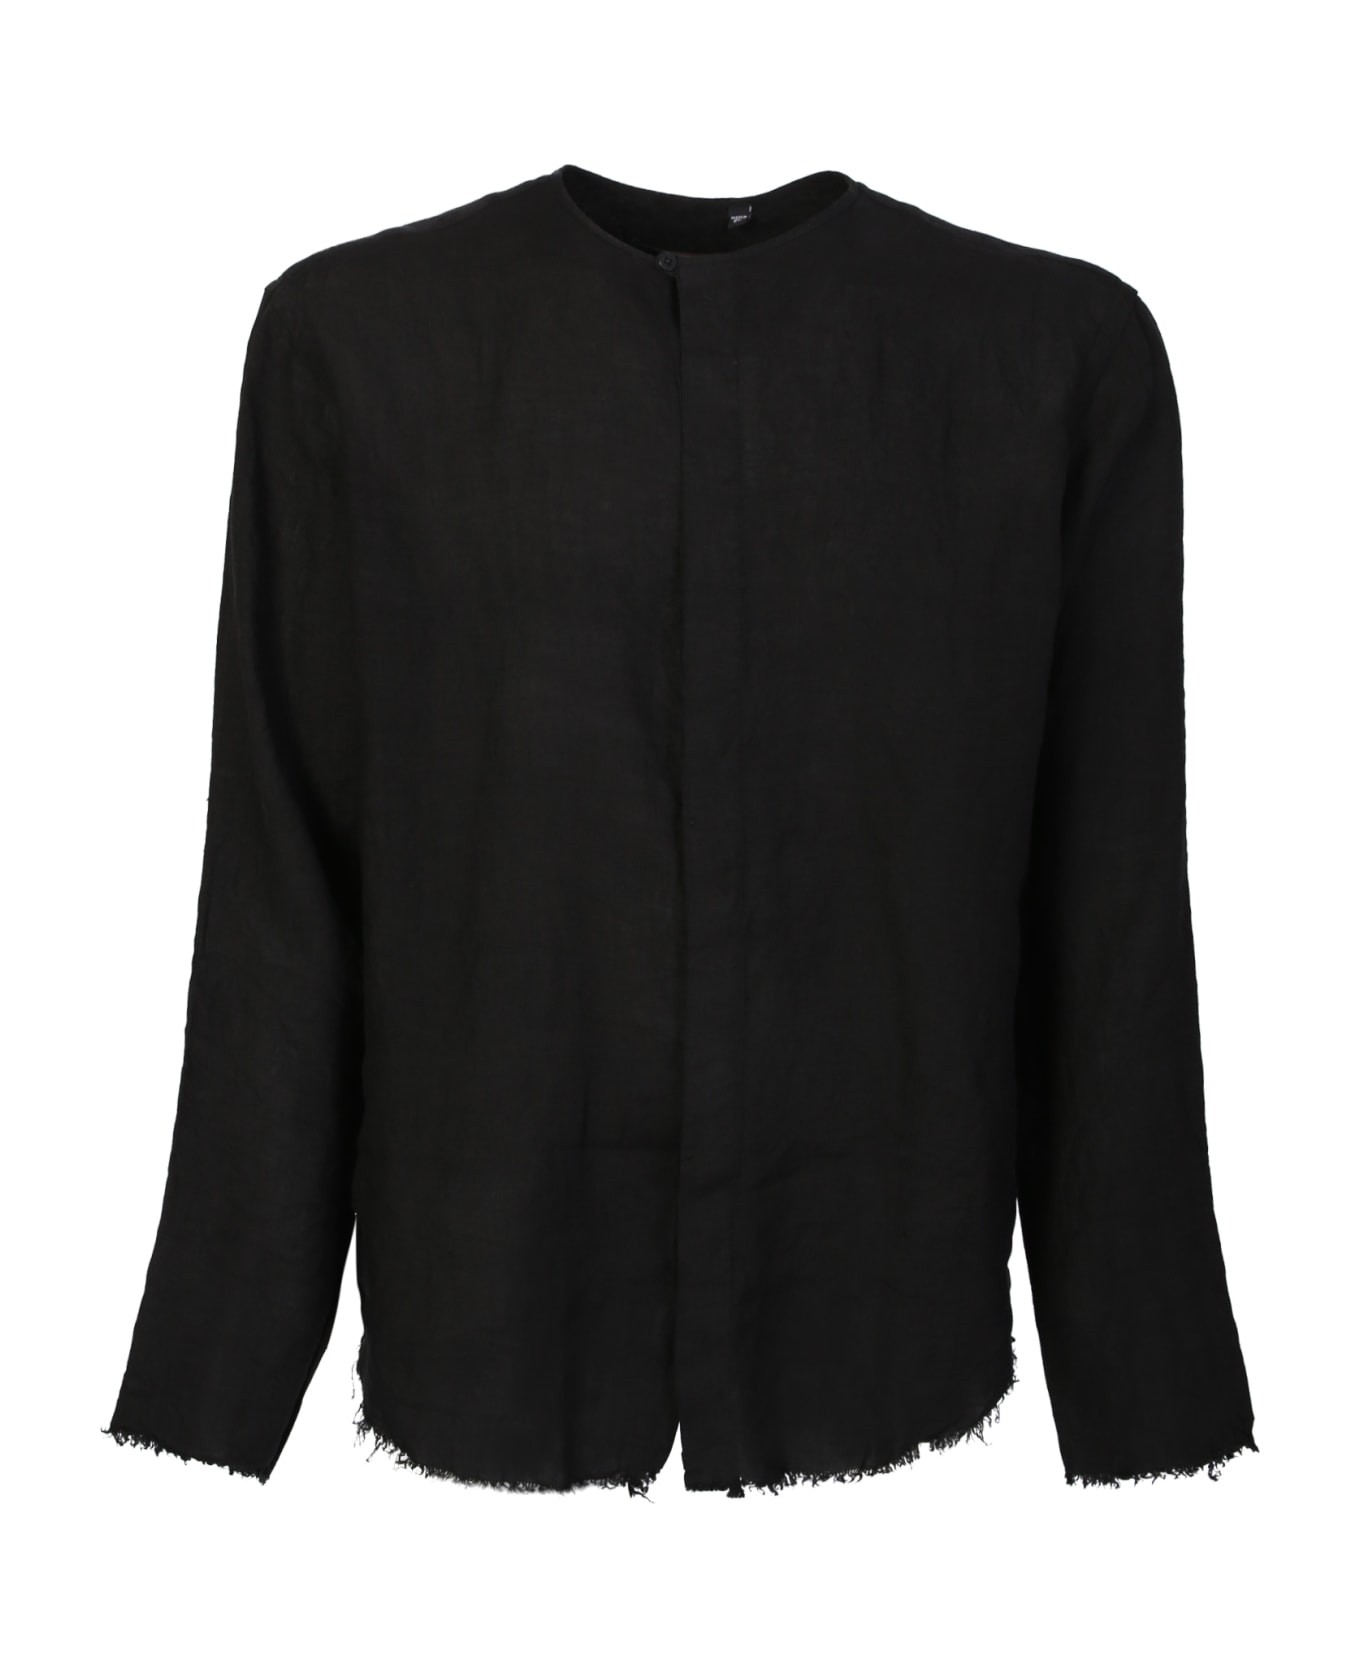 costumein Frayed Edges Black Shirt - Black